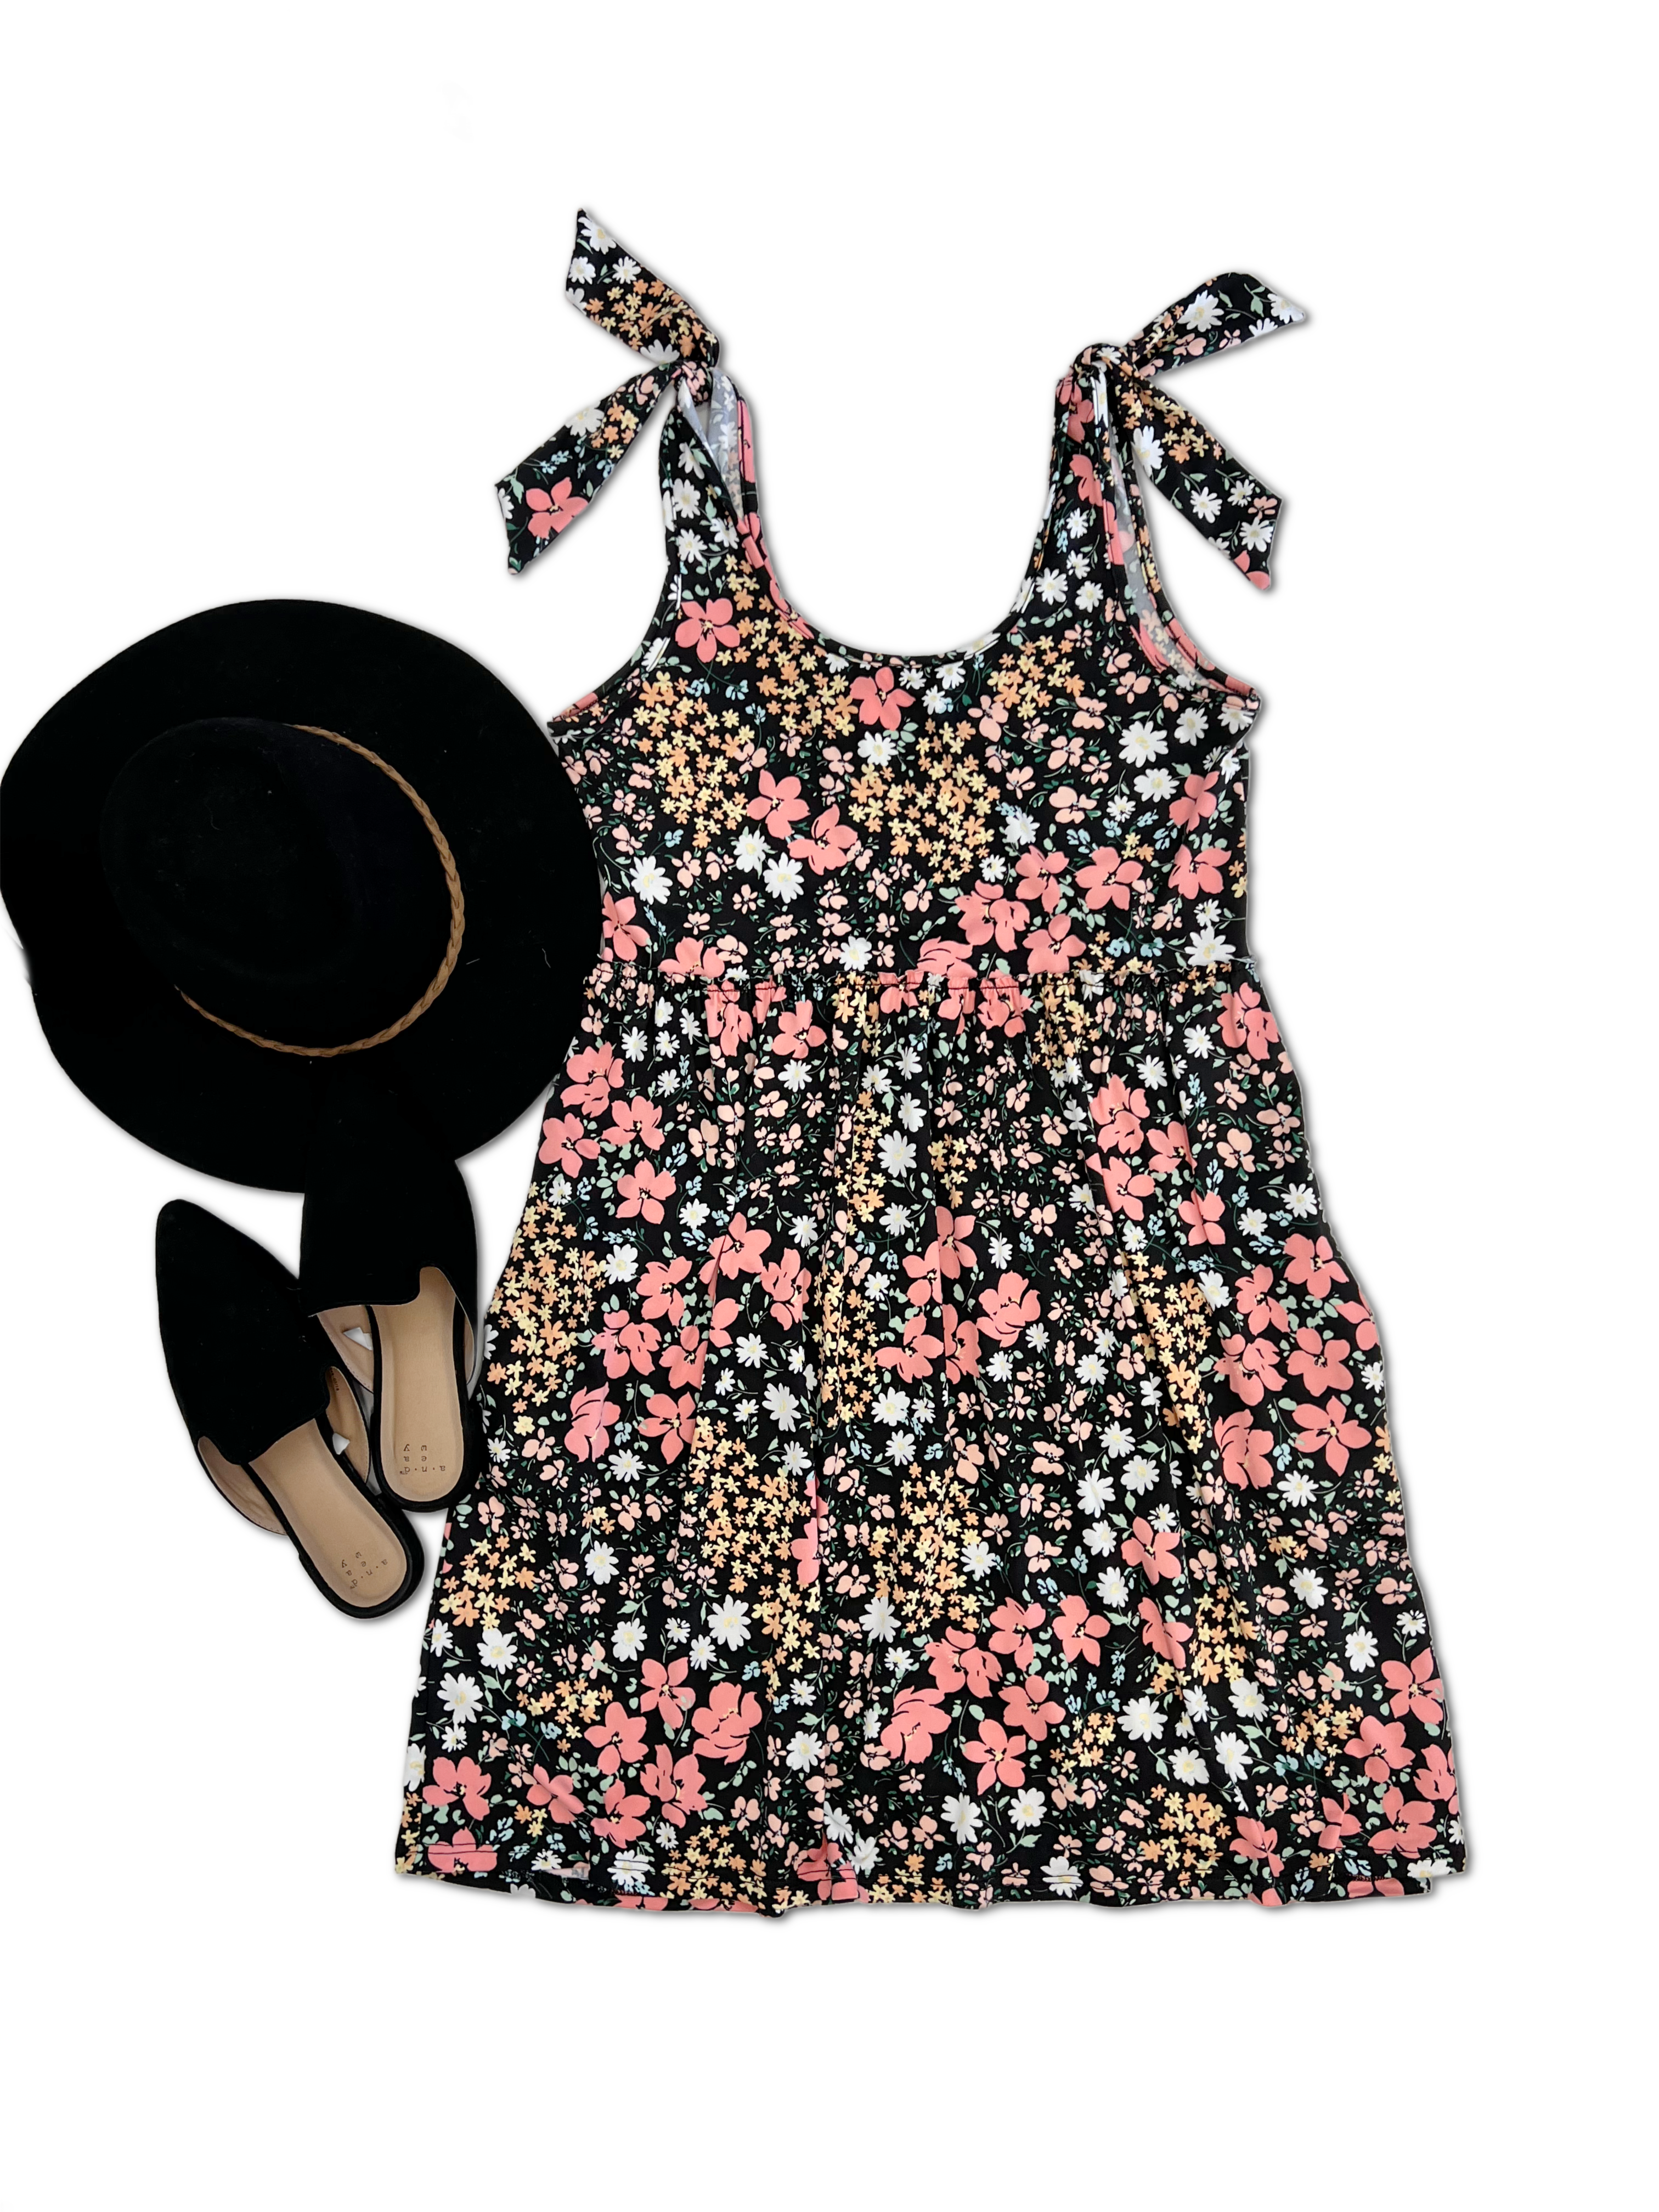 Floral Statement - Dress Boutique Simplified